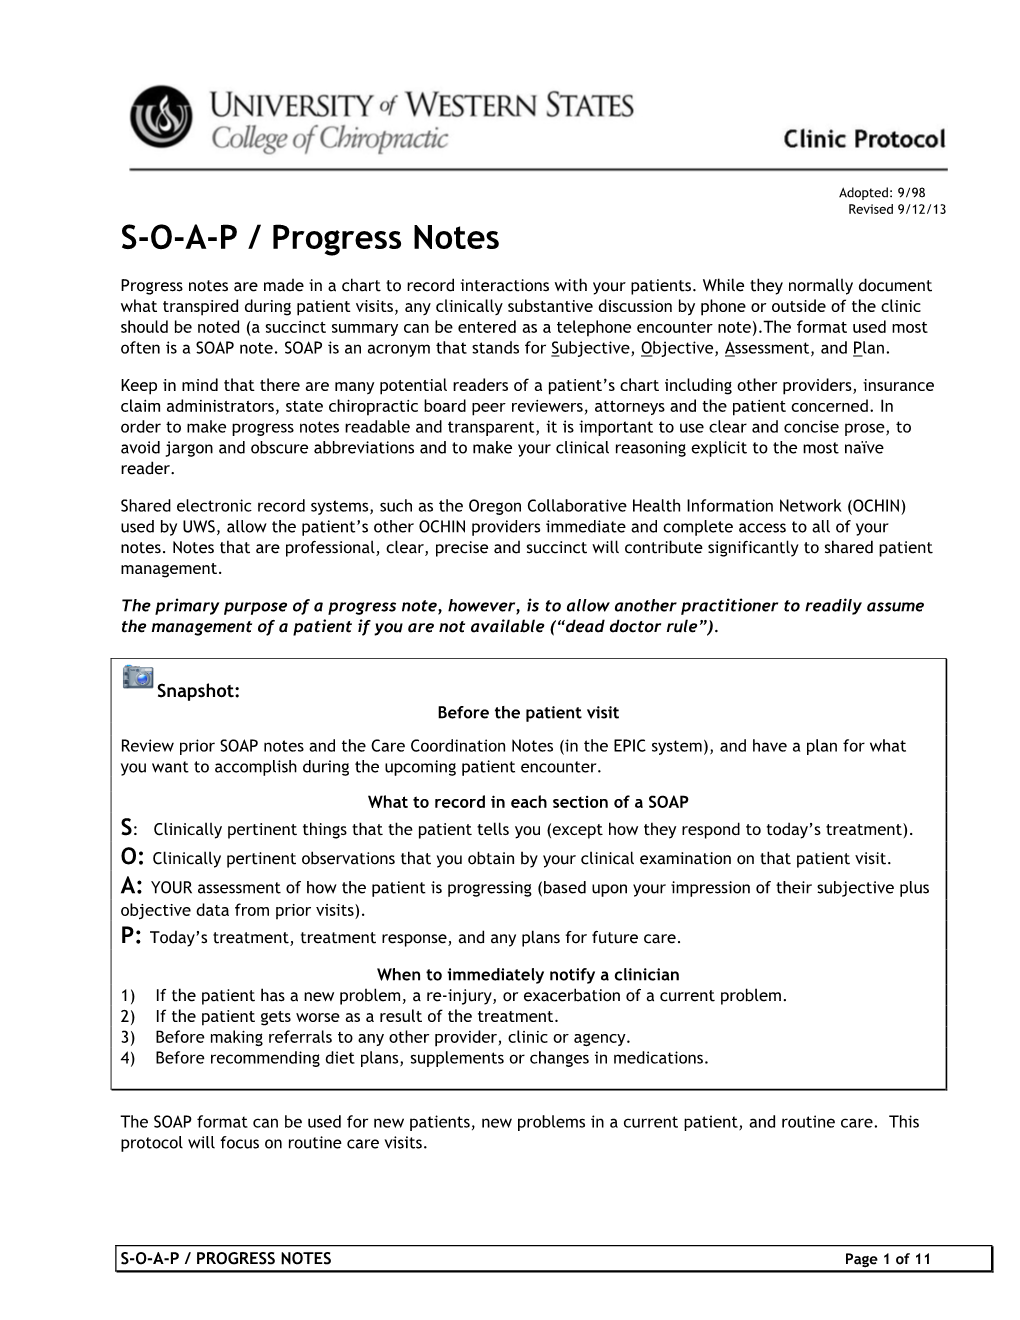 S-O-A-P / Progress Notes